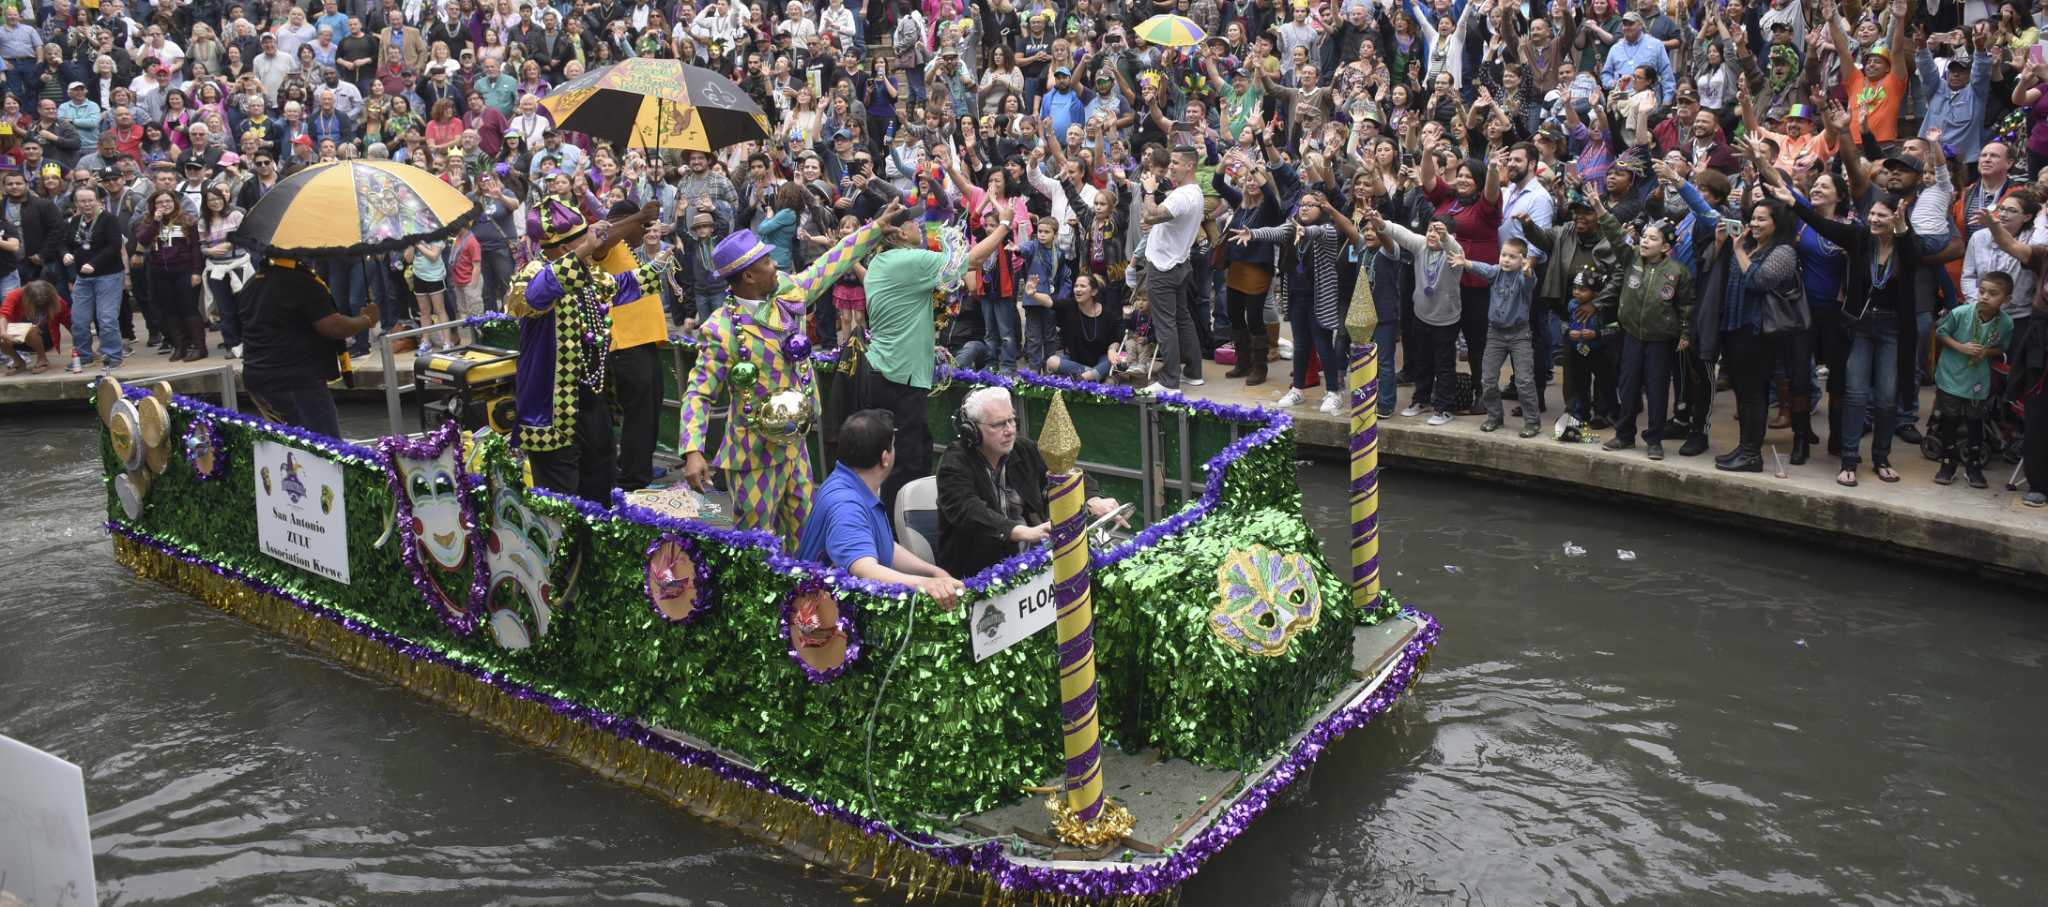 San Antonio’s Mardi Gras Festival & River Parade returns to River Walk